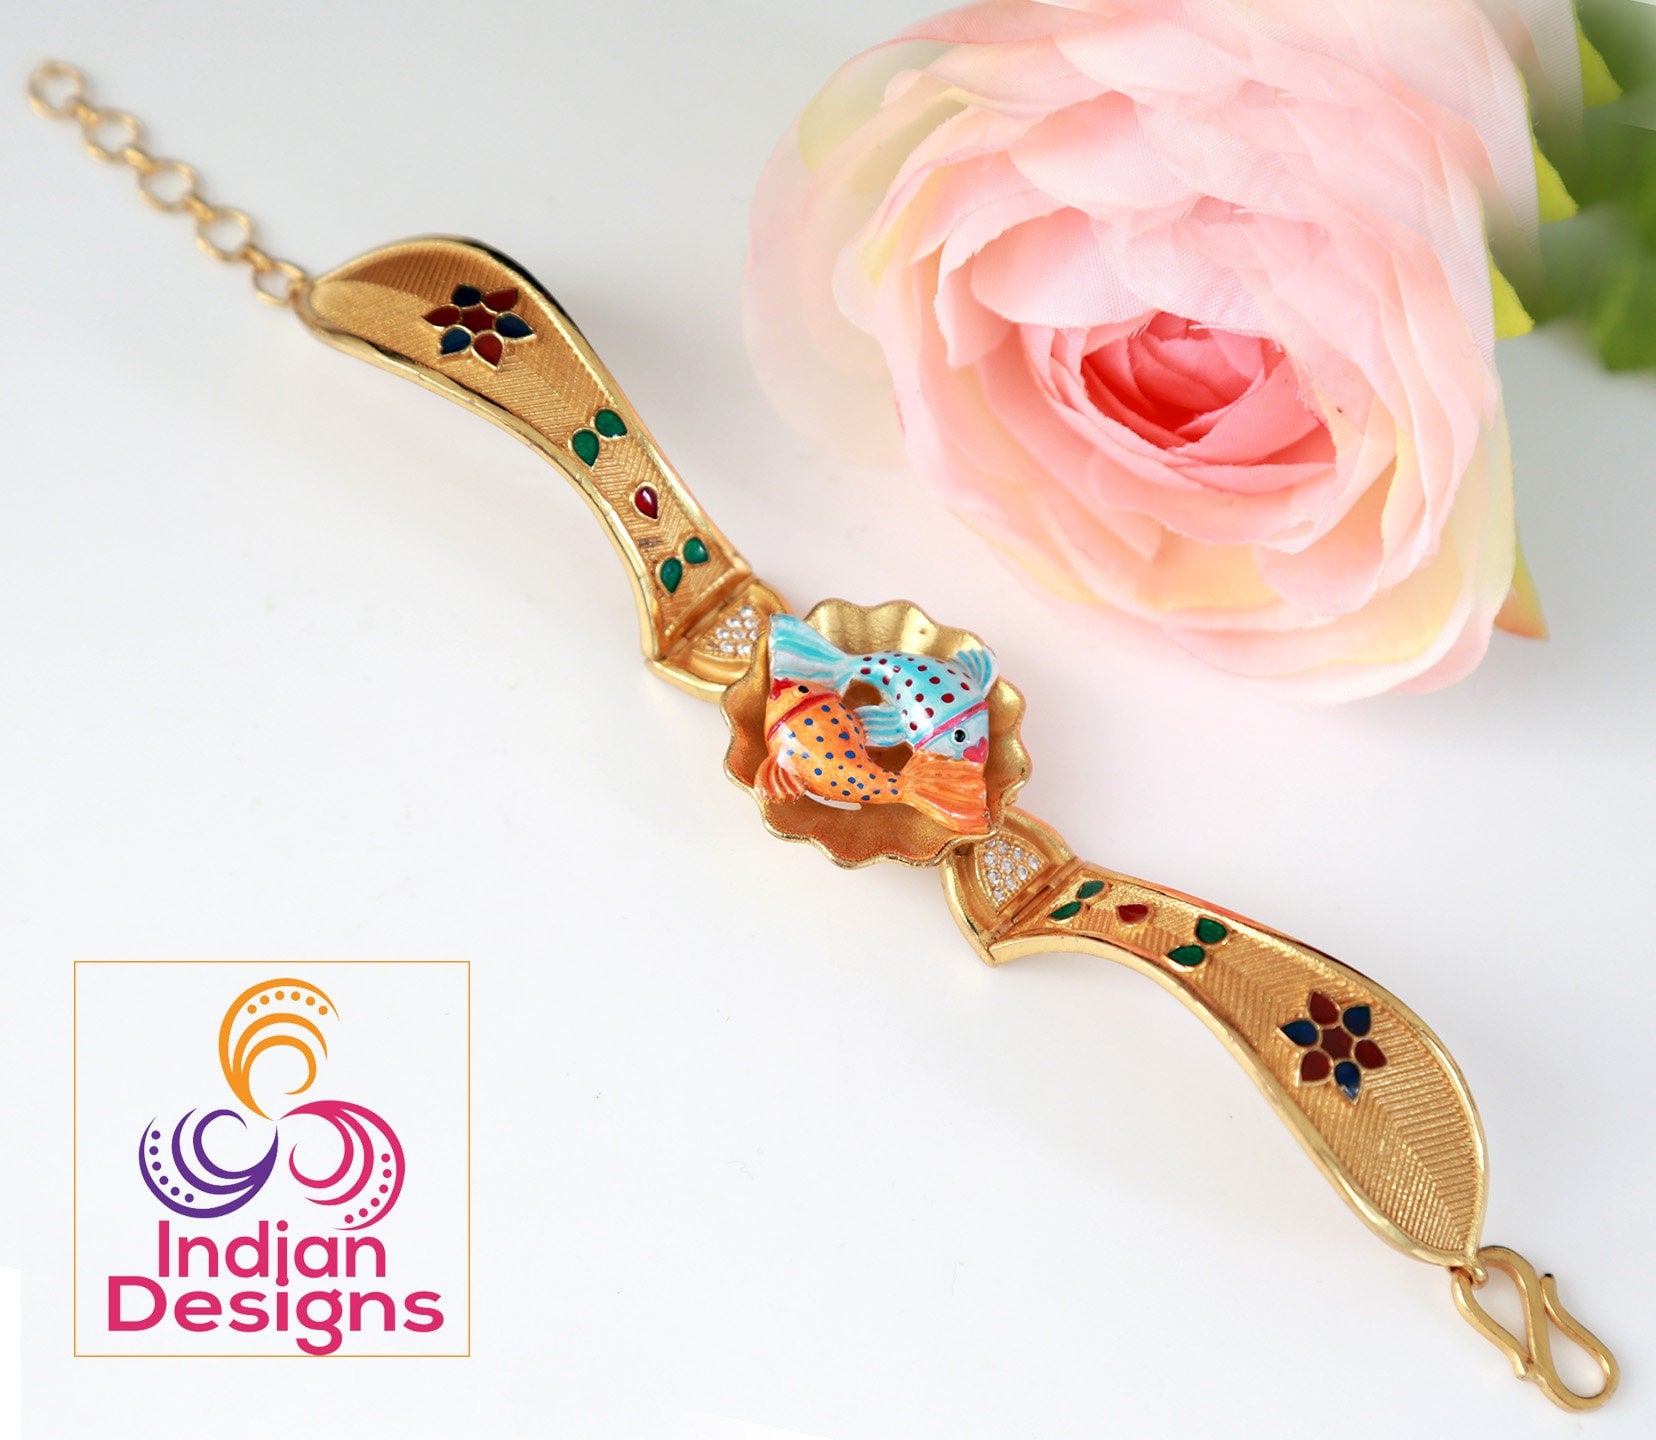 Buy Modern Party Wear Flower Design 1 Gram Gold Bracelet